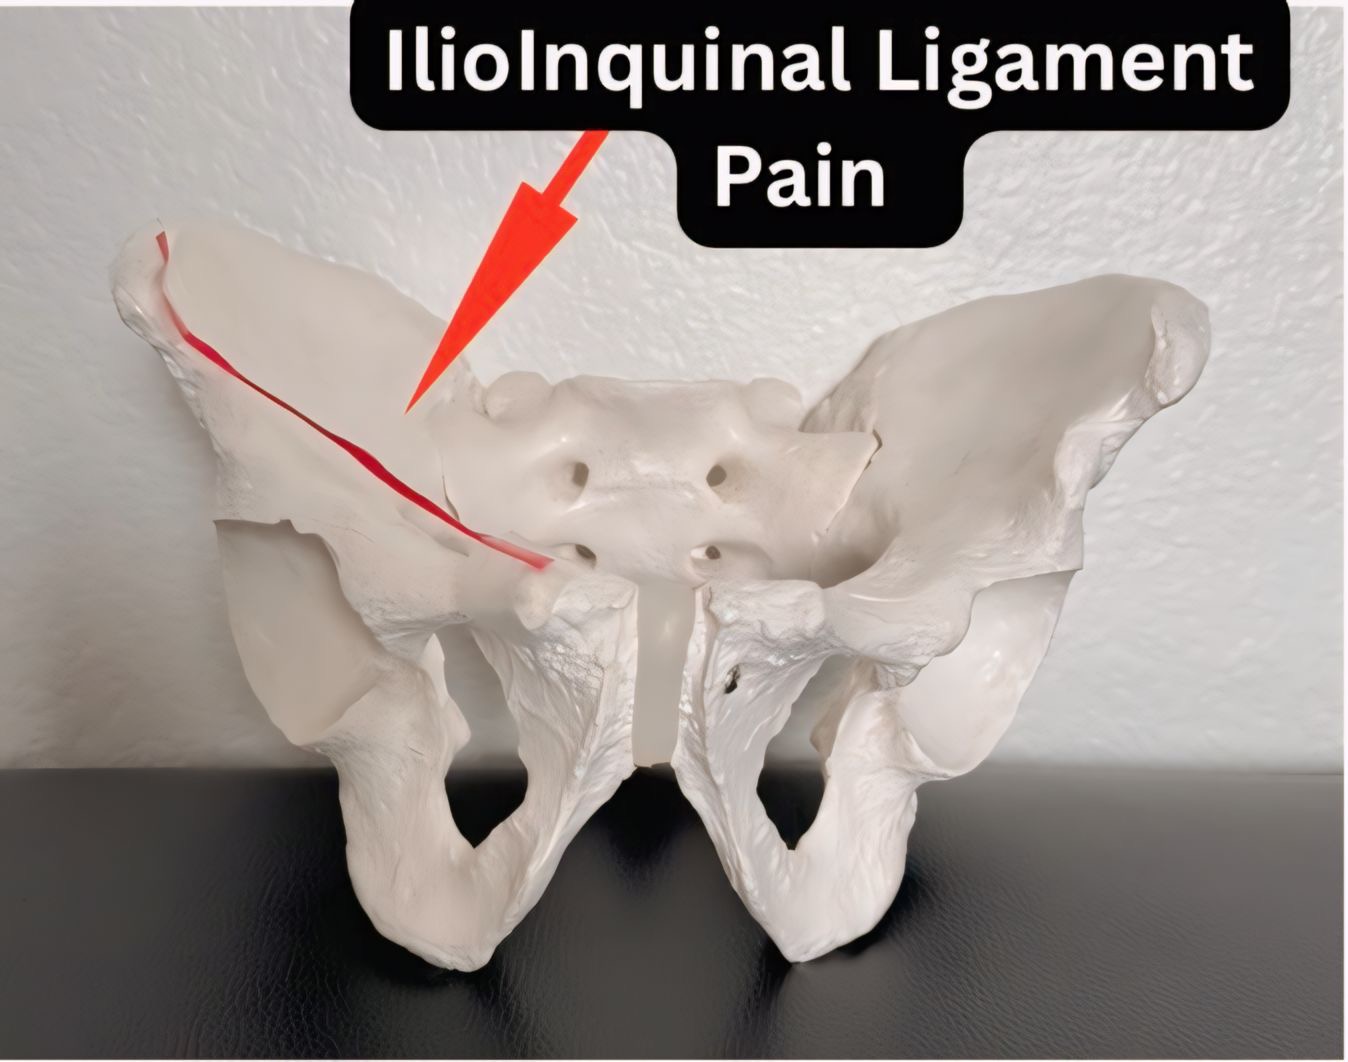 Ilioinguinal Ligament Pain: Relieve Groin Pain with Ilioinguinal Ligament  Support!